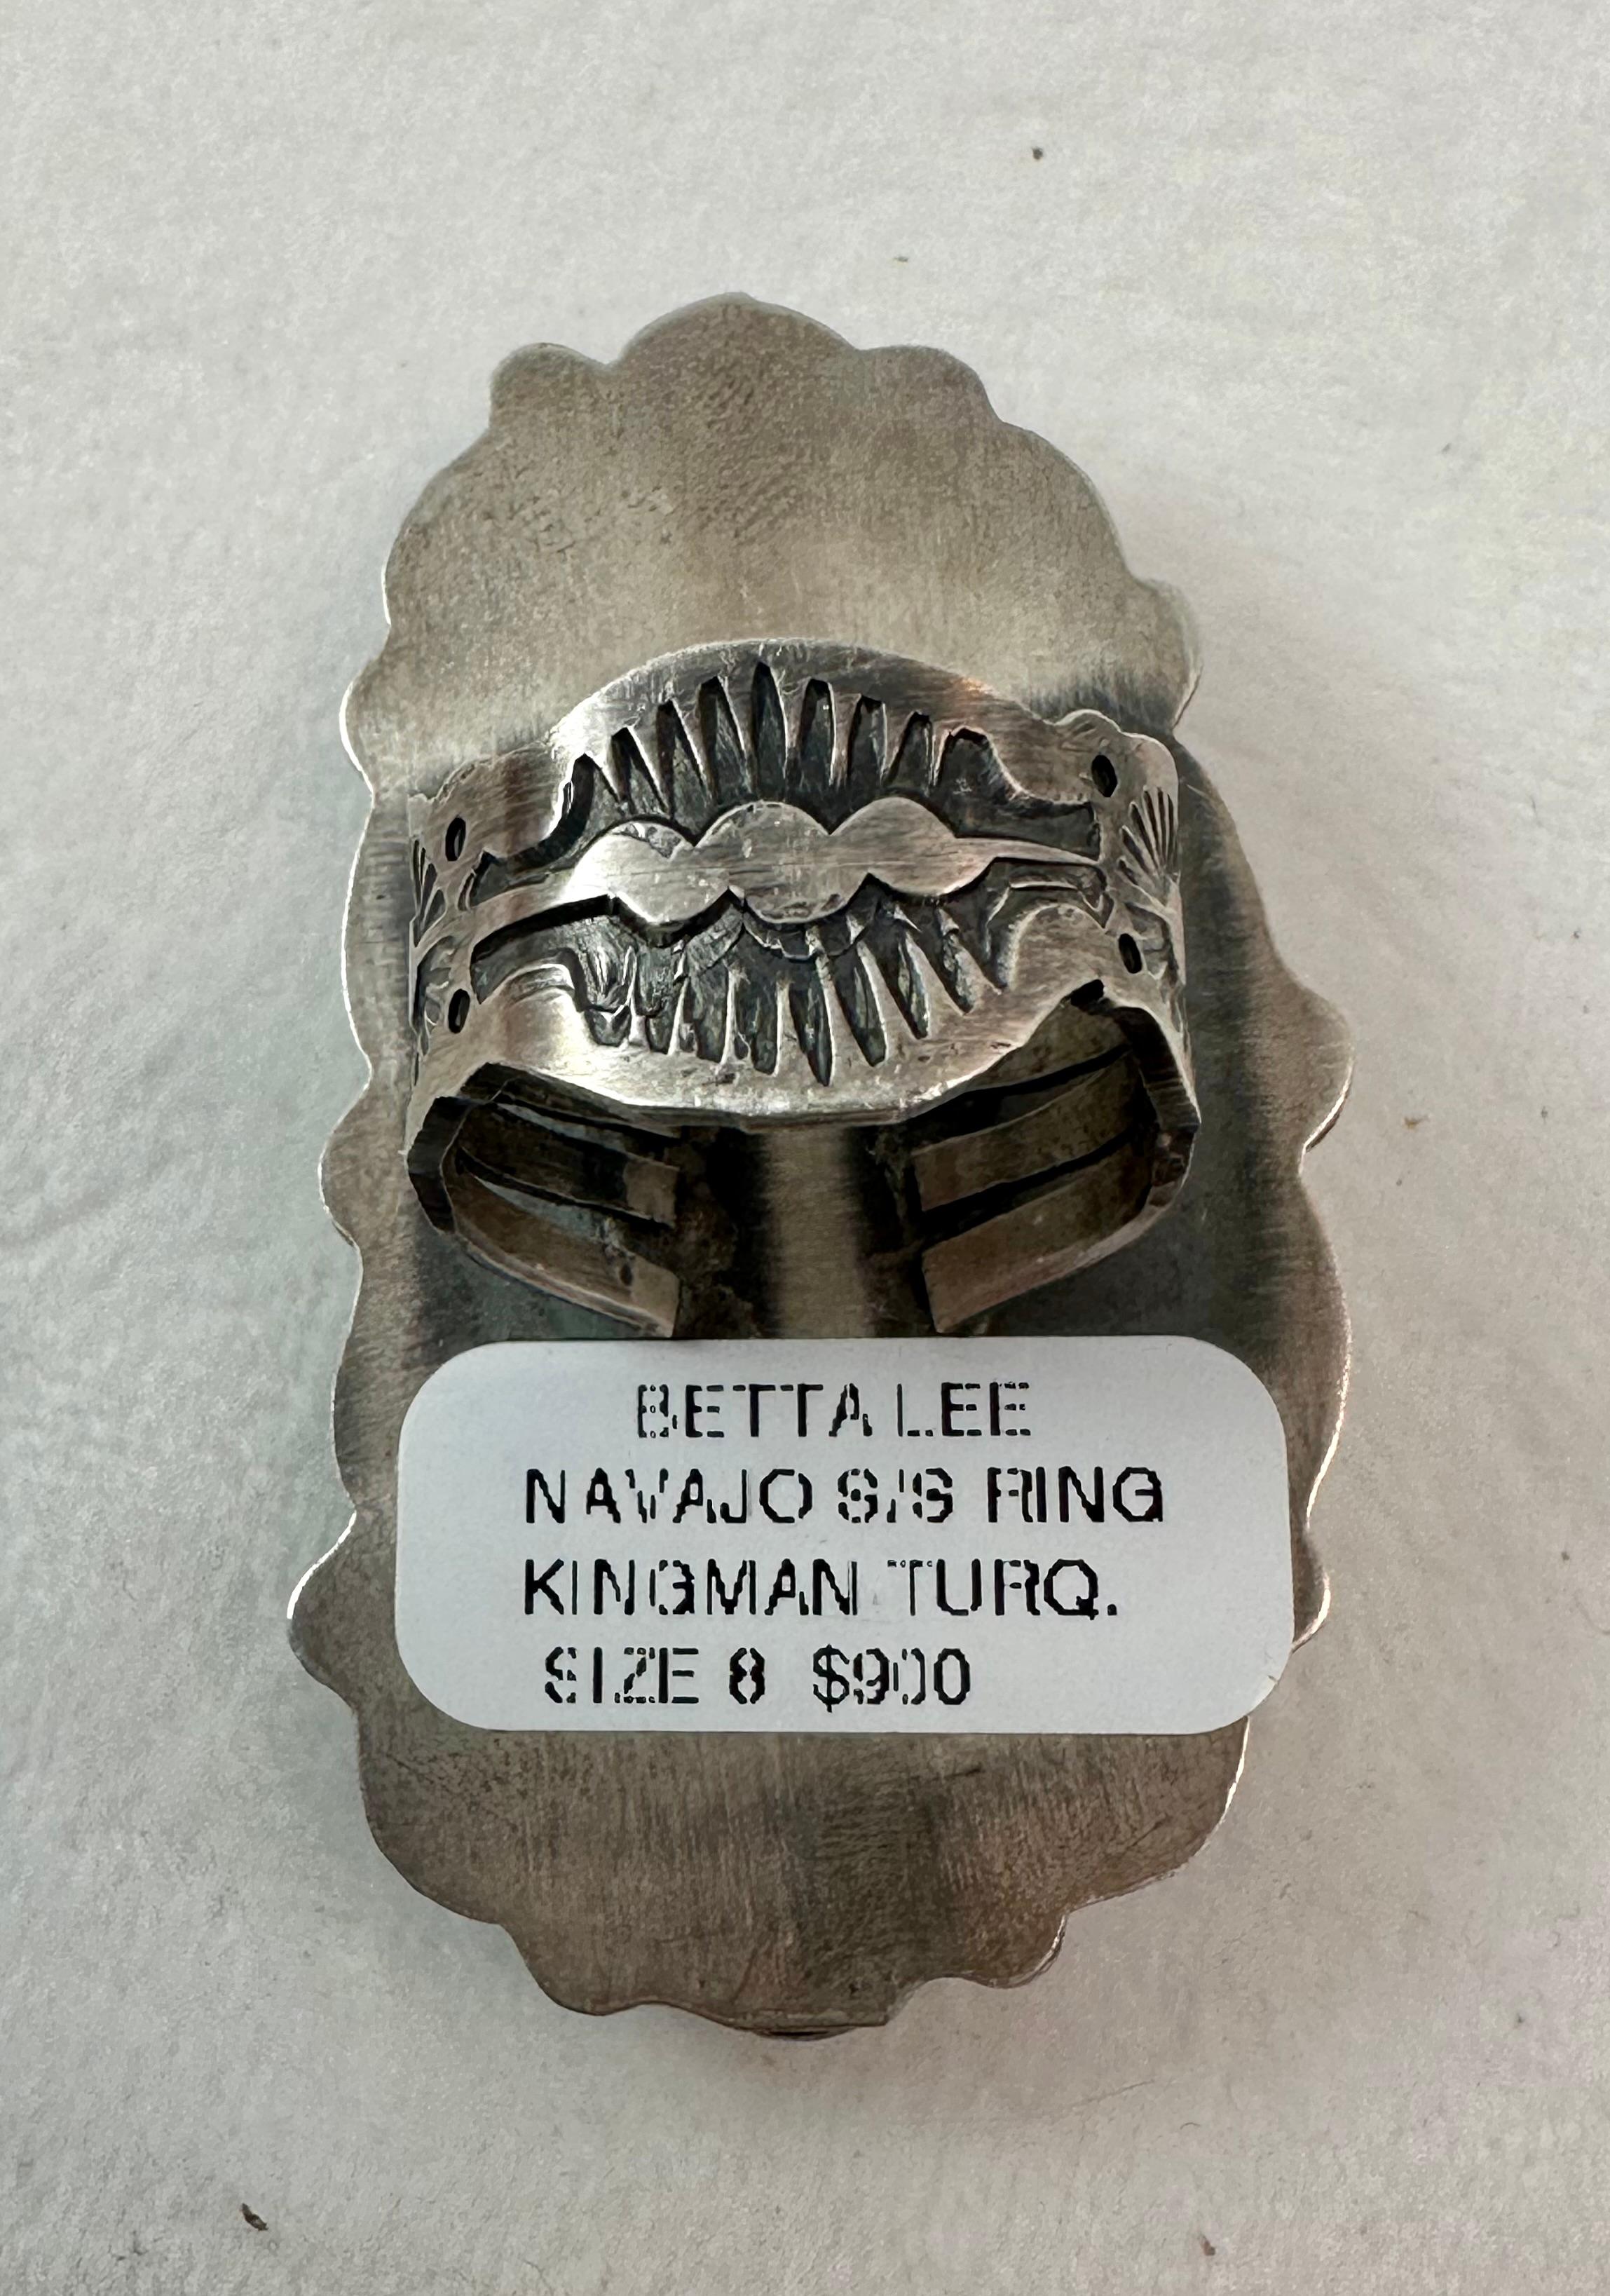 Sterling Silber .925 Navajo Kingman Türkis Ring von Betta Lee Größe 8
Top des Rings misst etwa 1 